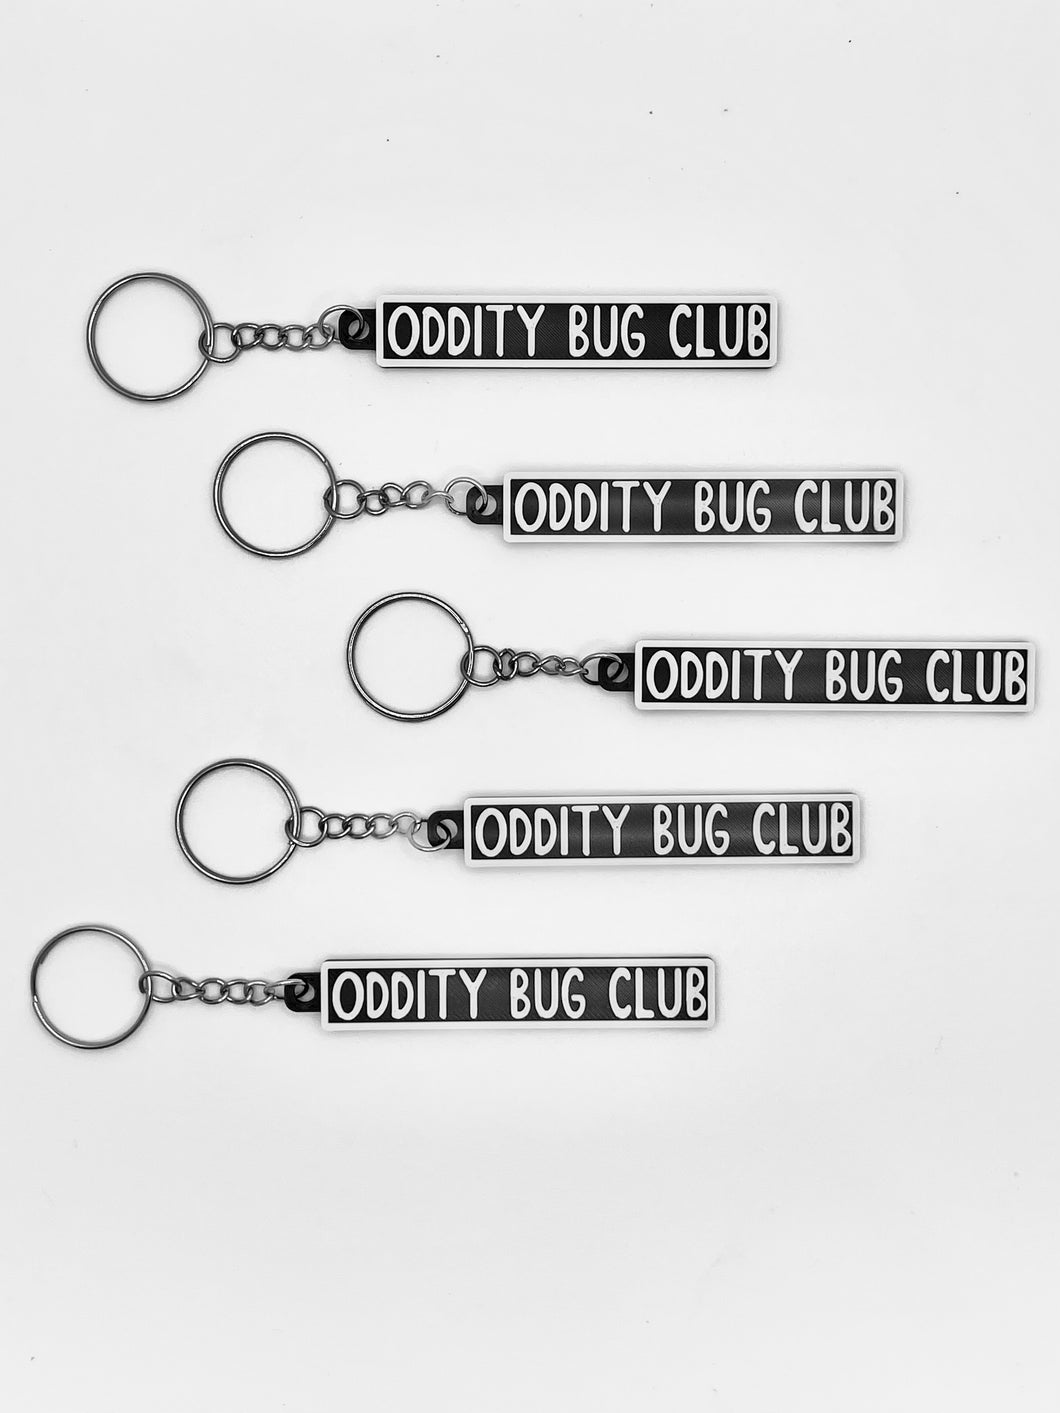 Oddity Bug Club Keychain